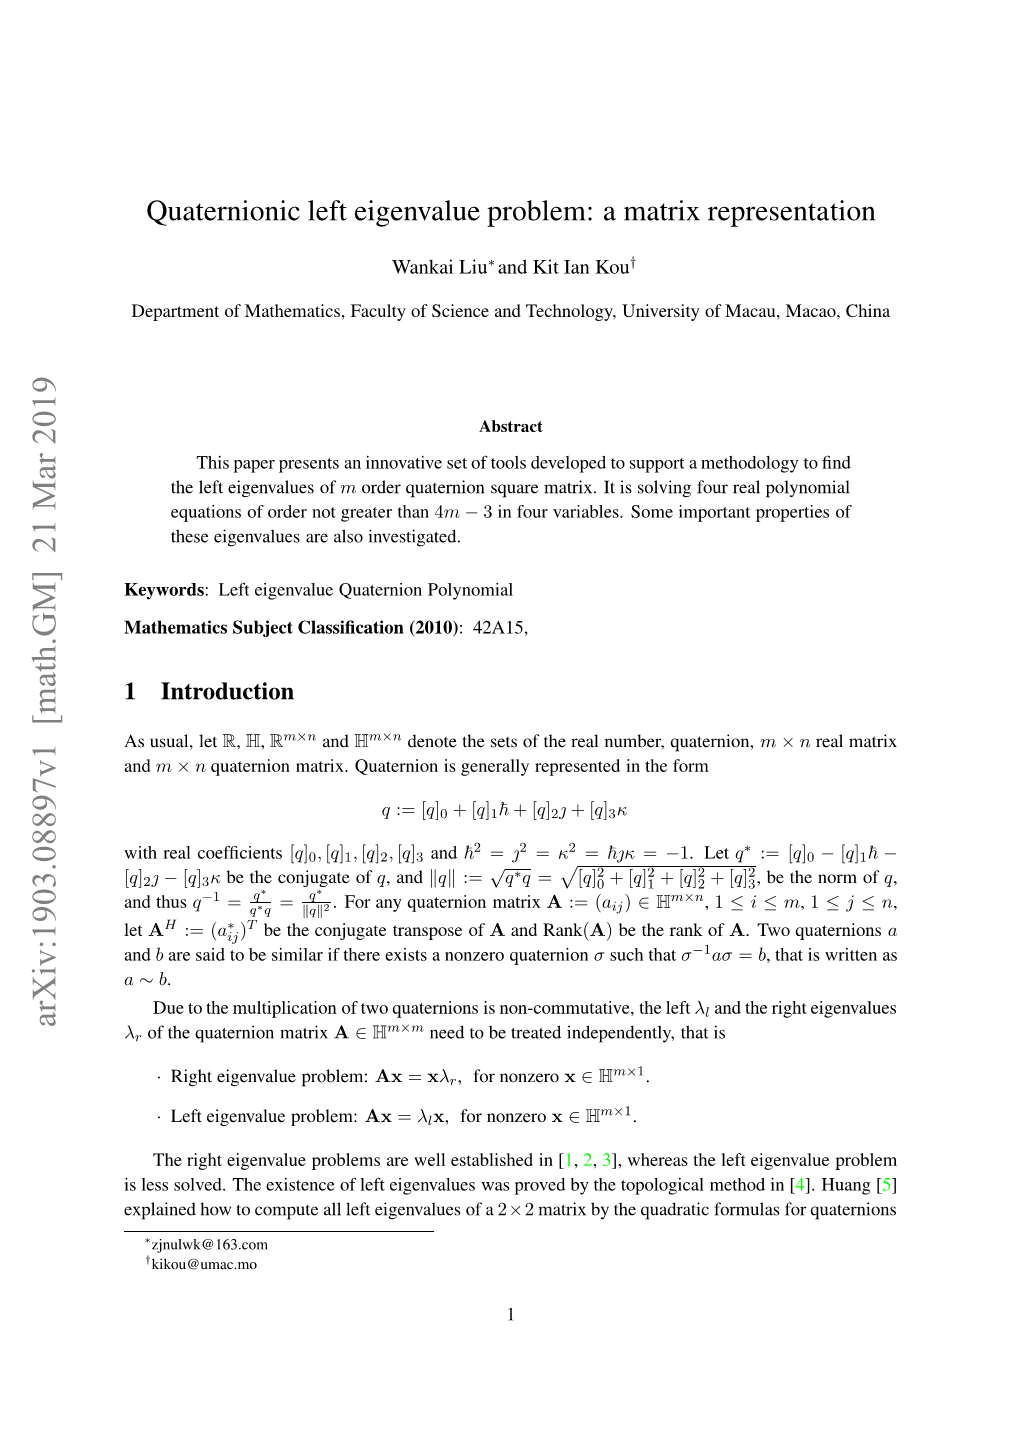 Quaternionic Left Eigenvalue Problem: a Matrix Representation